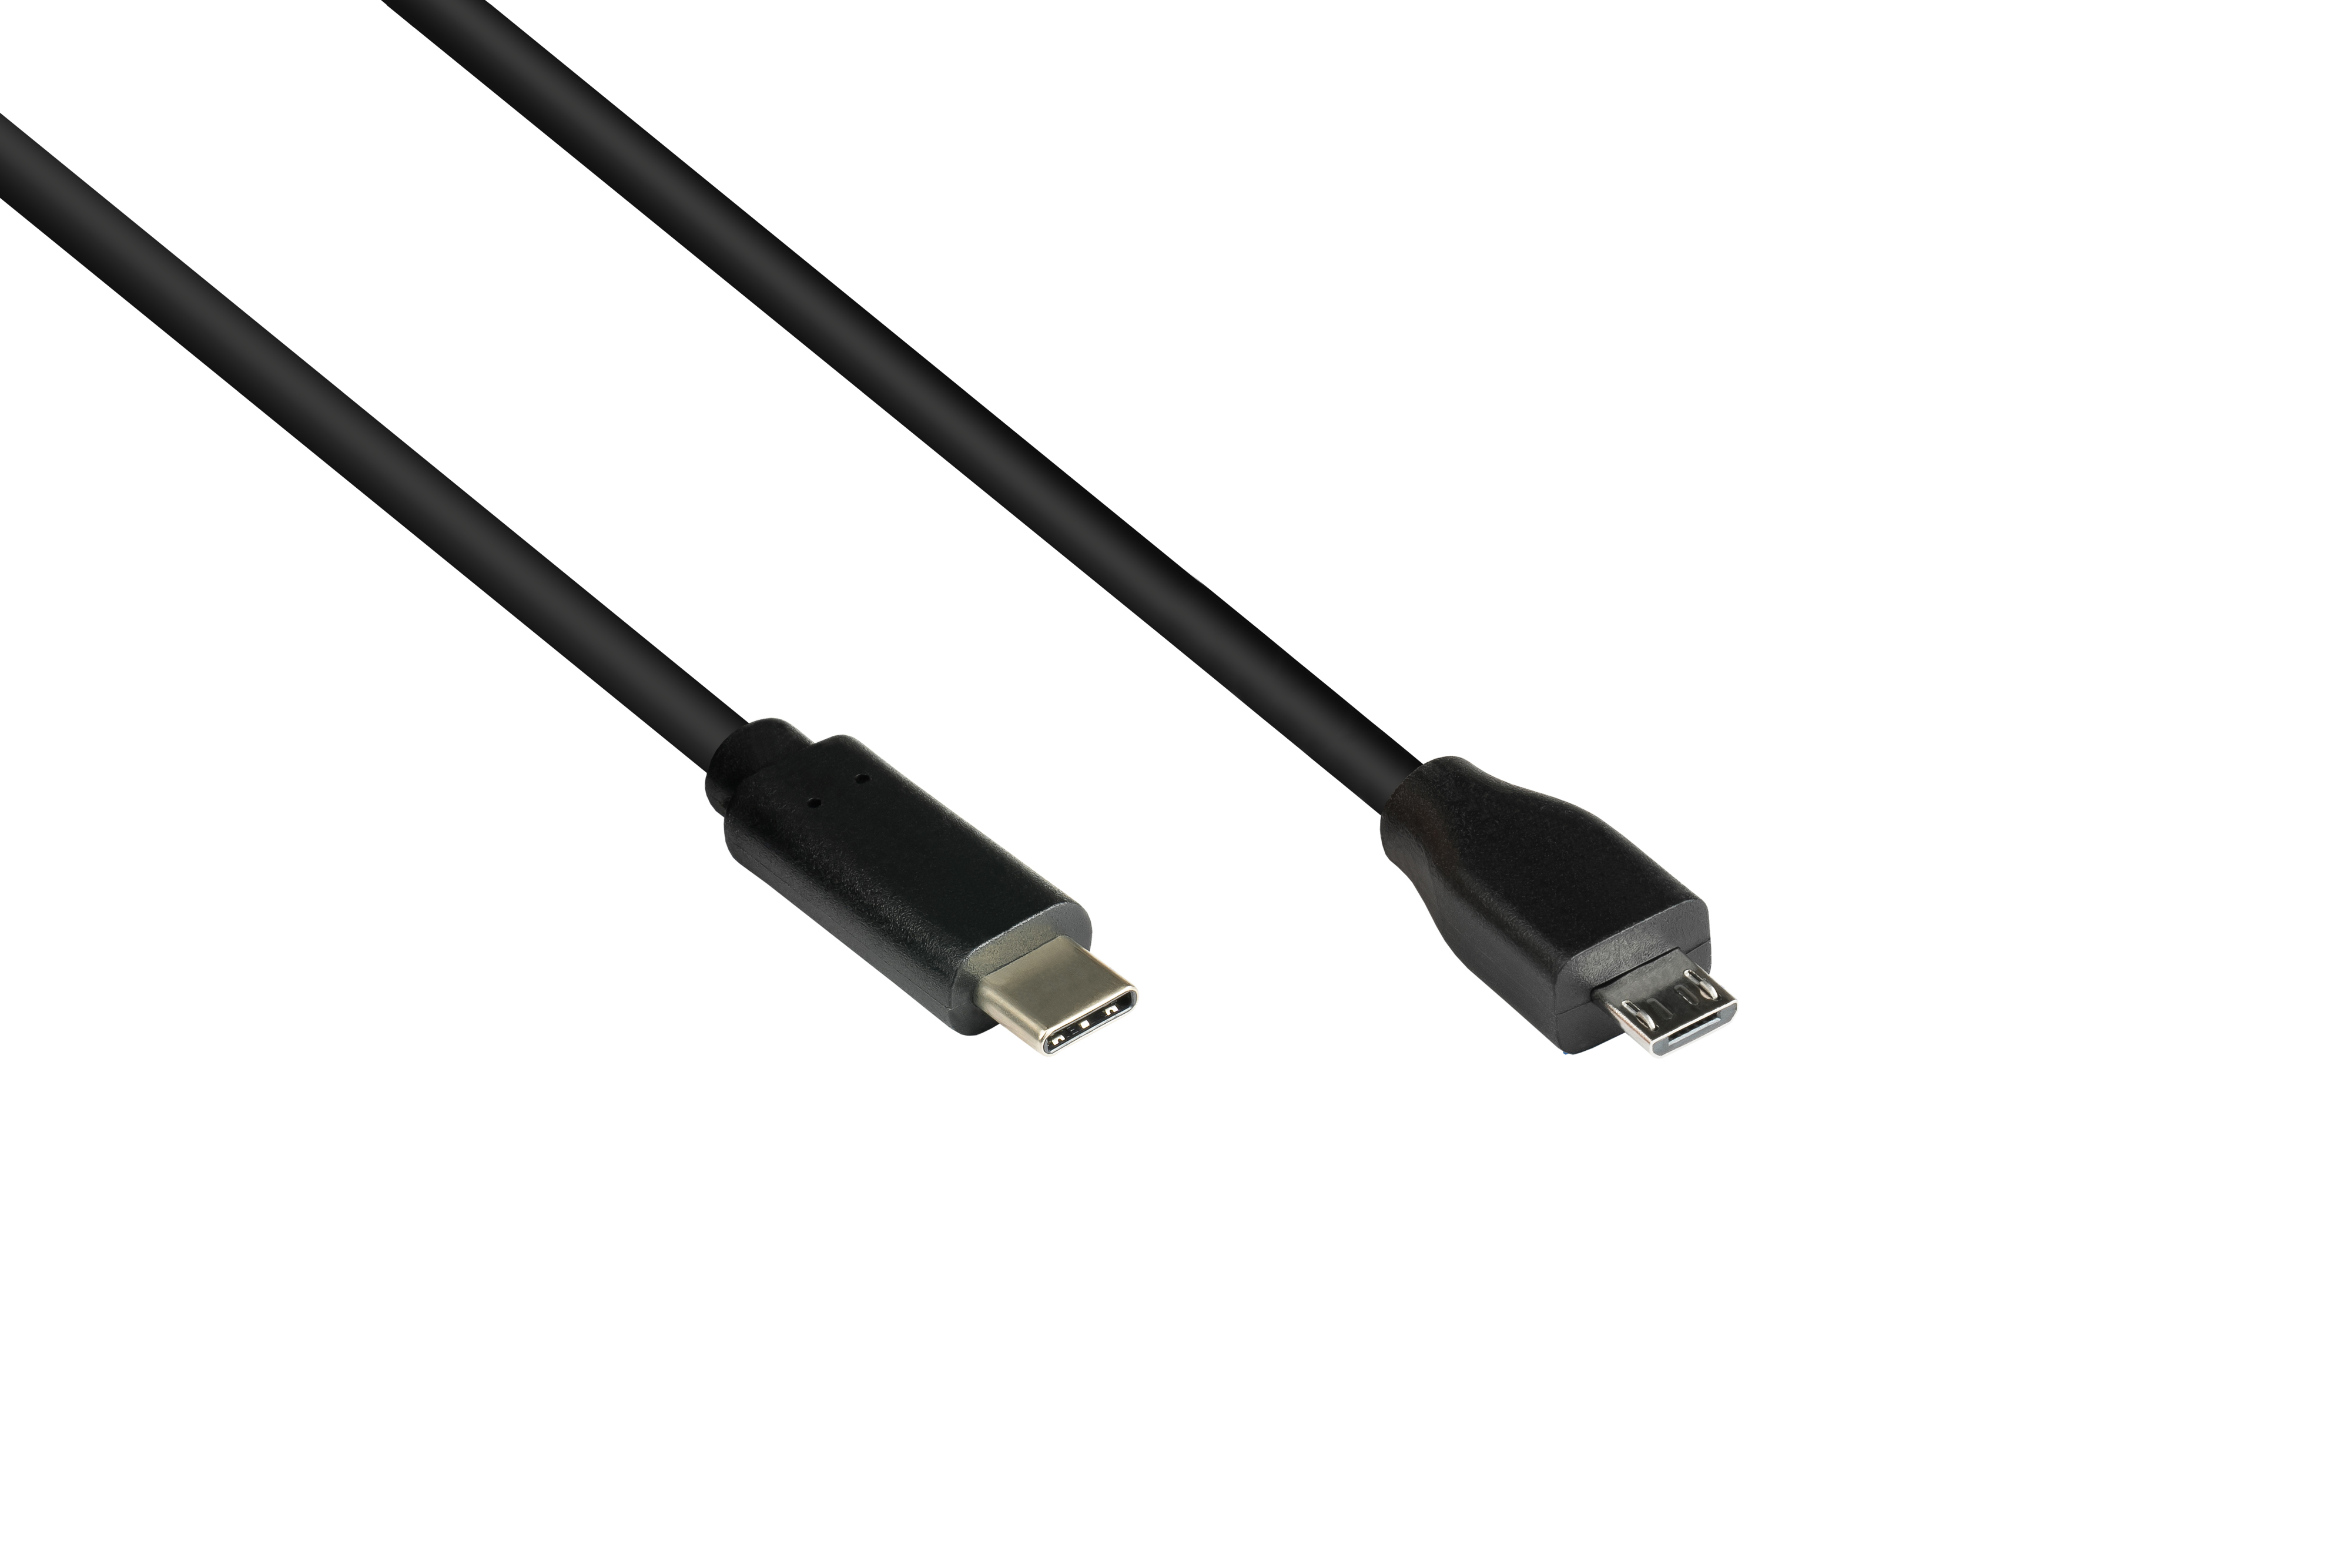 B USB Micro USB-C™ an 2.0 2.0, schwarz Stecker CONNECTIONS USB , GOOD CU, Stecker Anschlusskabel